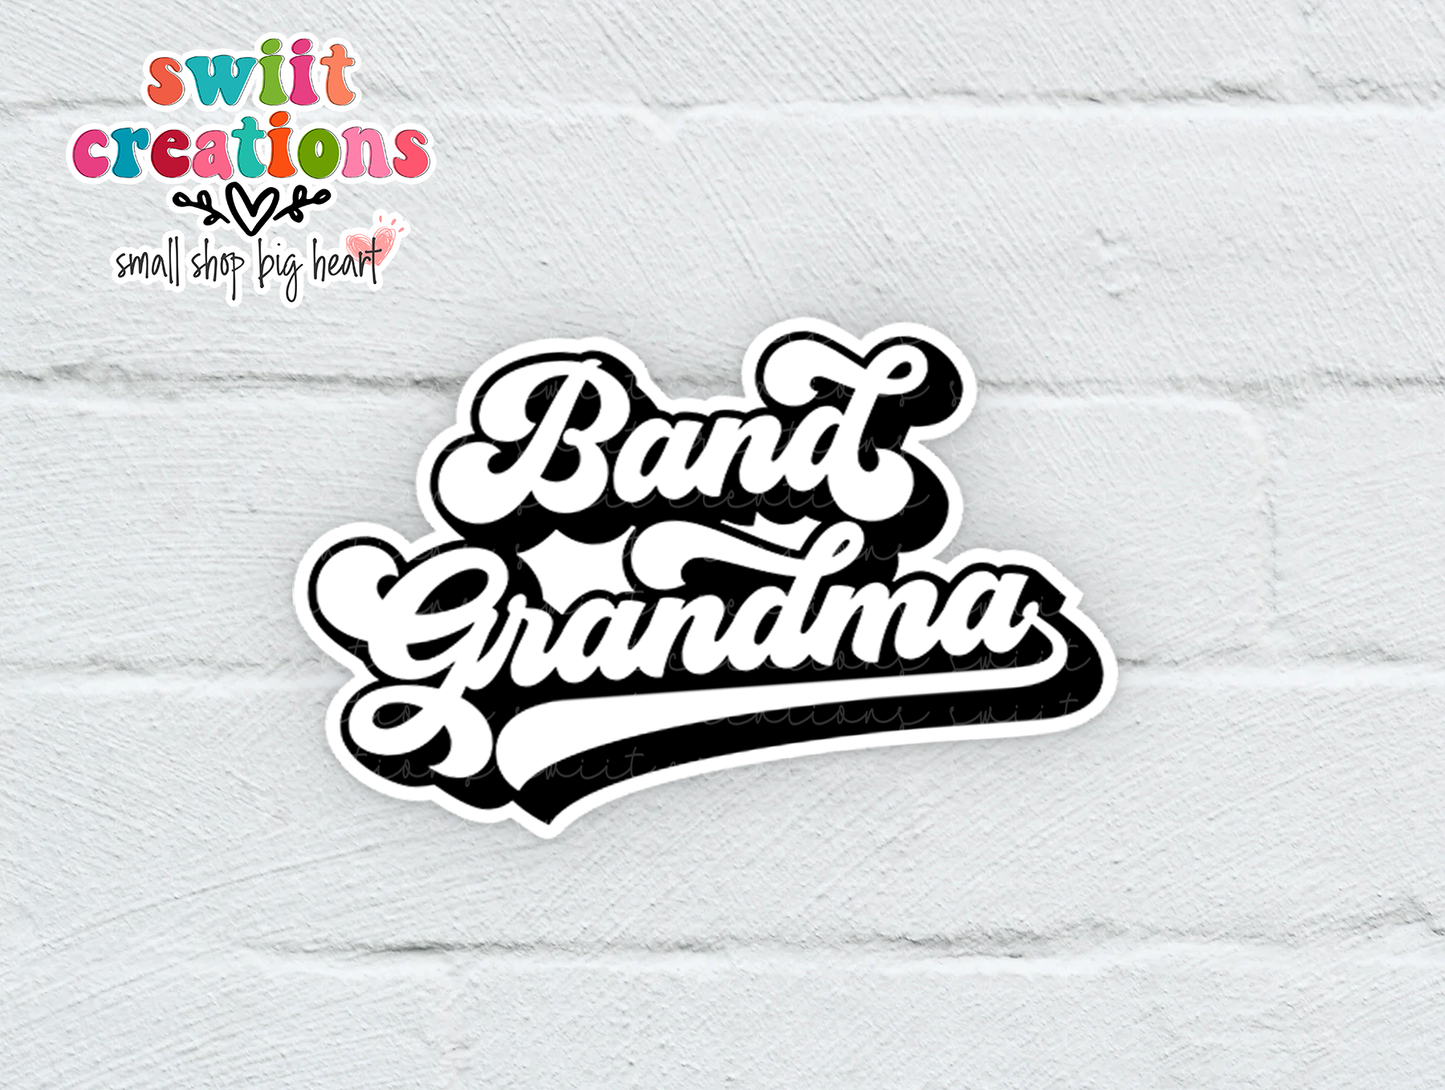 Band Grandma Waterproof Sticker   (SS347) | SCD459